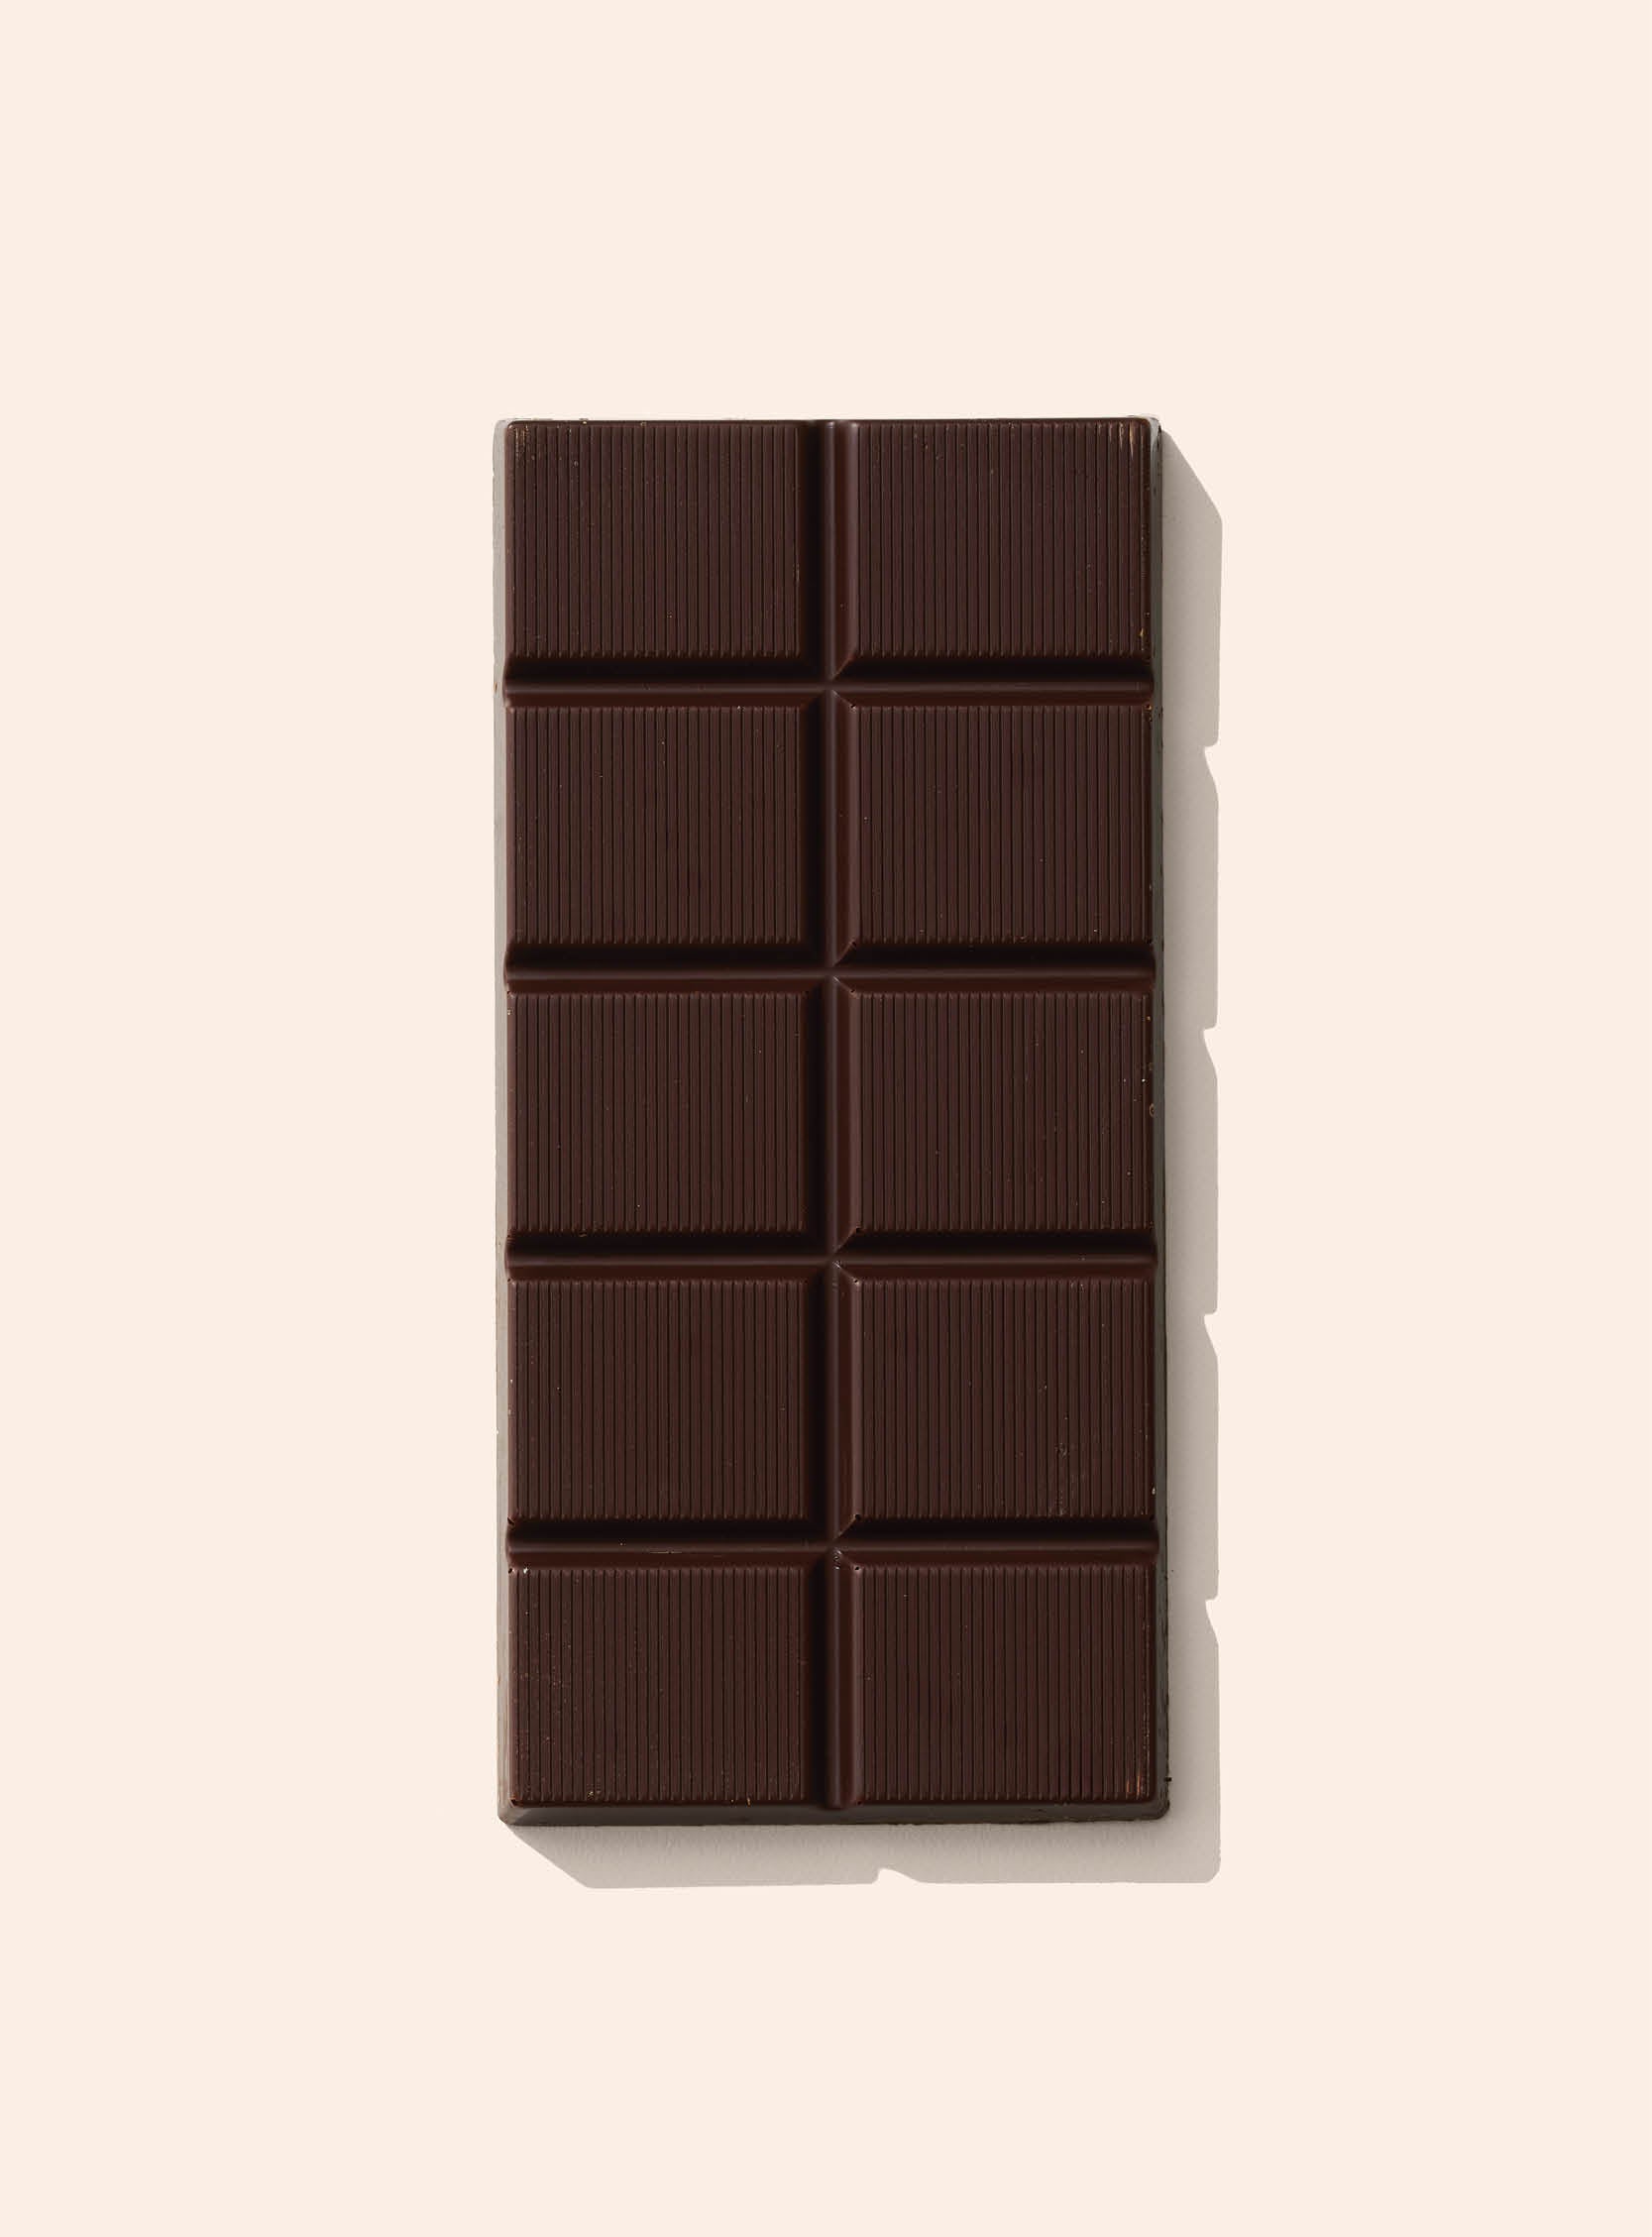 73% Dark Chocolate Bar